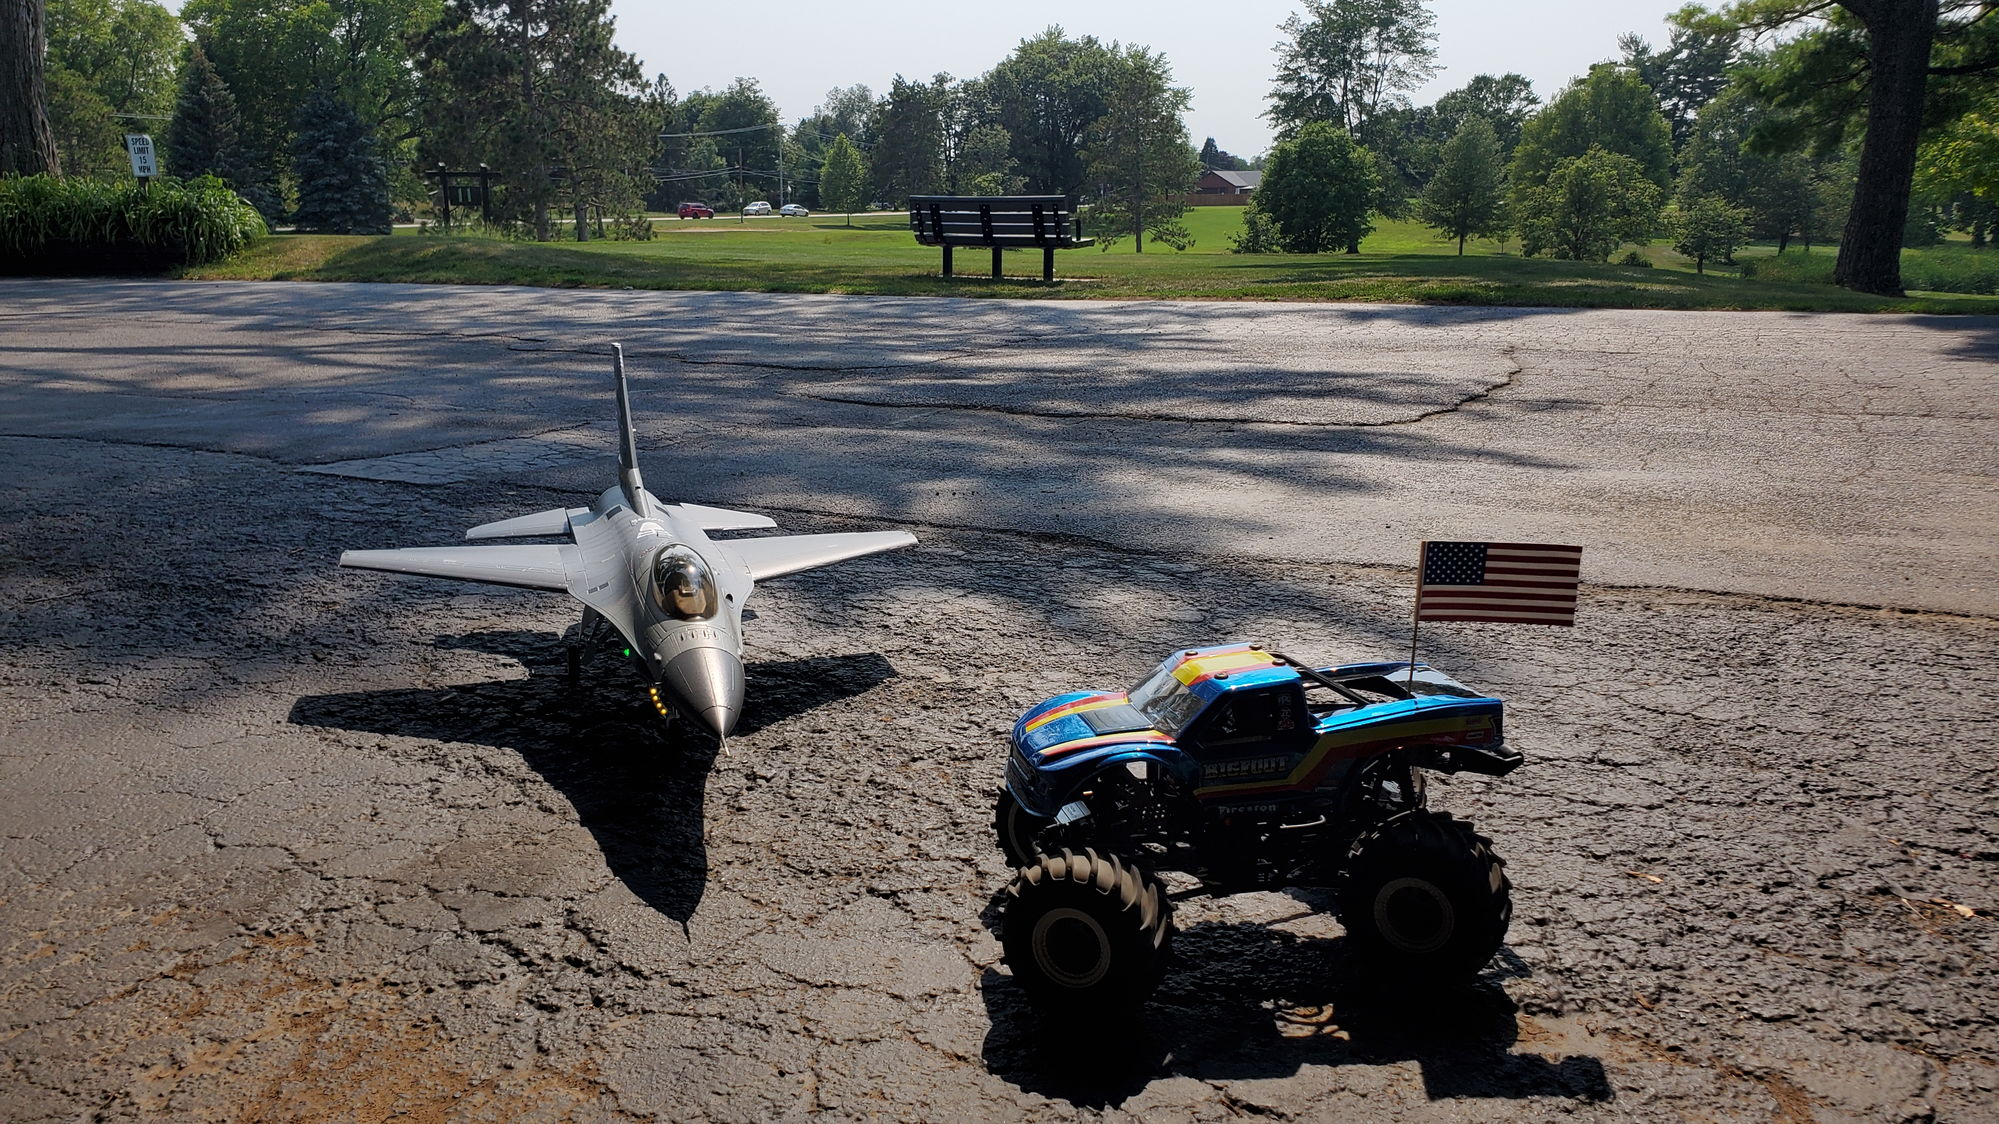 General 1999x1124 toys RC Car jets car flag American flag trees bench asphalt